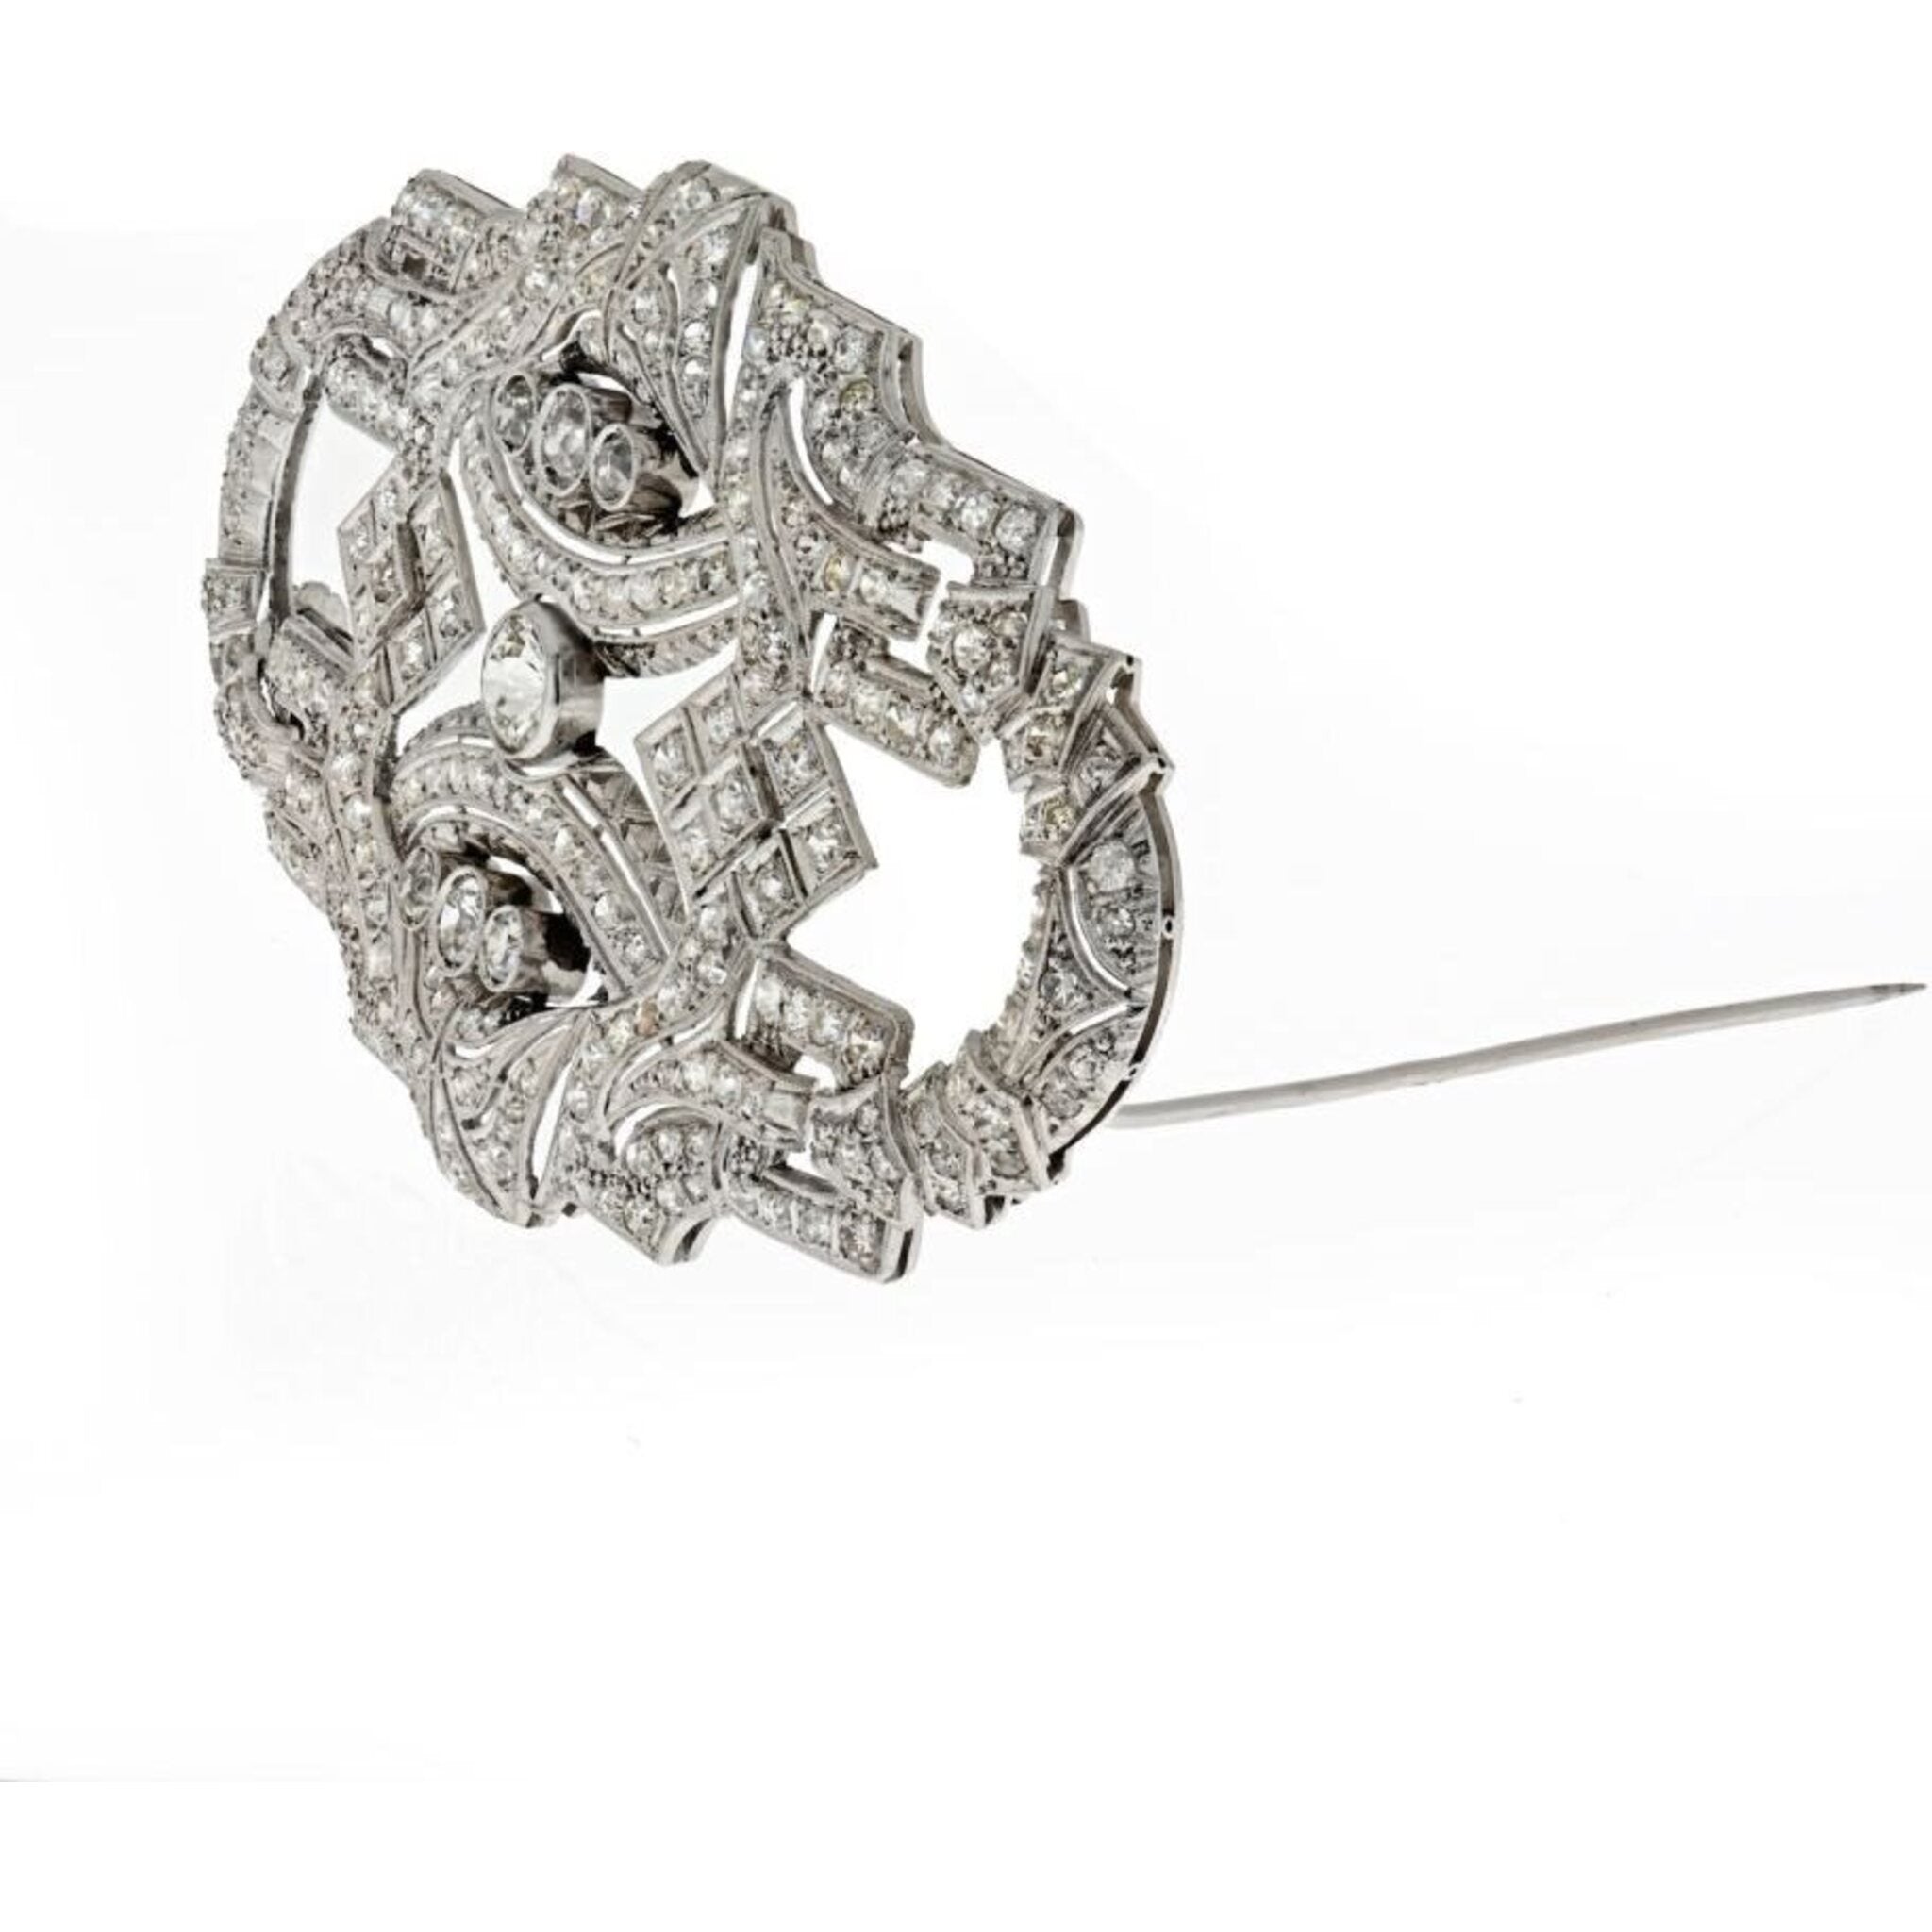 Fancy 10 Carat Diamond Brooch Pin Foliate Motif Platinum & 18K Gold